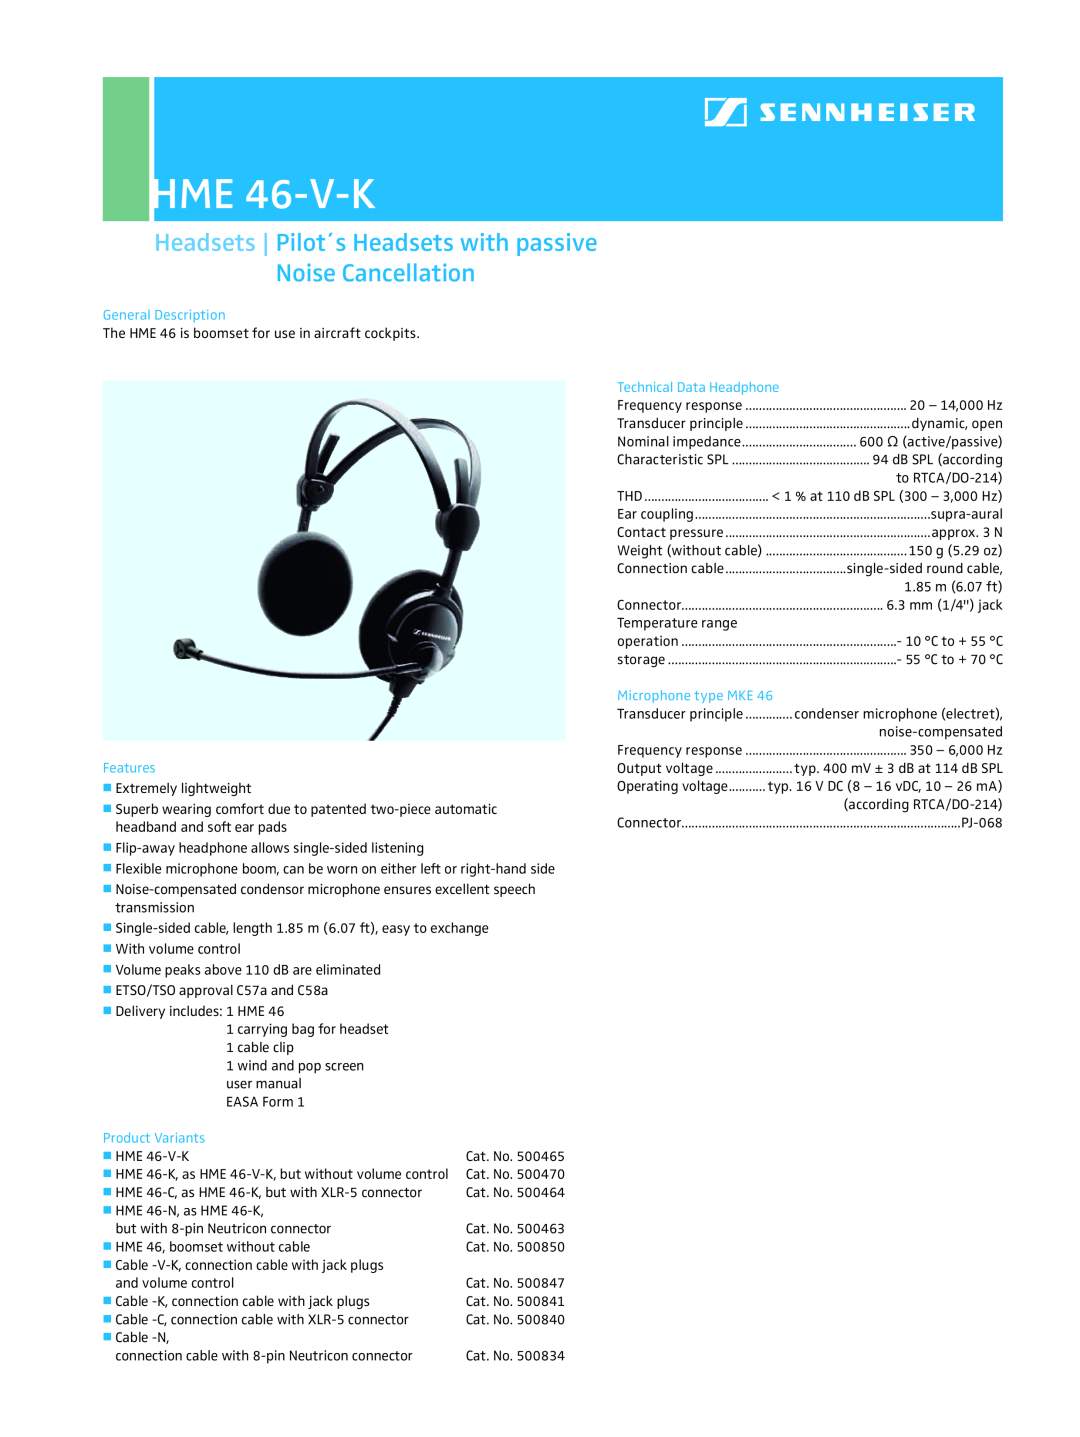 Sennheiser HME 46-V-K user manual Headsets Pilot´s Headsets with passive, Noise Cancellation, General Description 